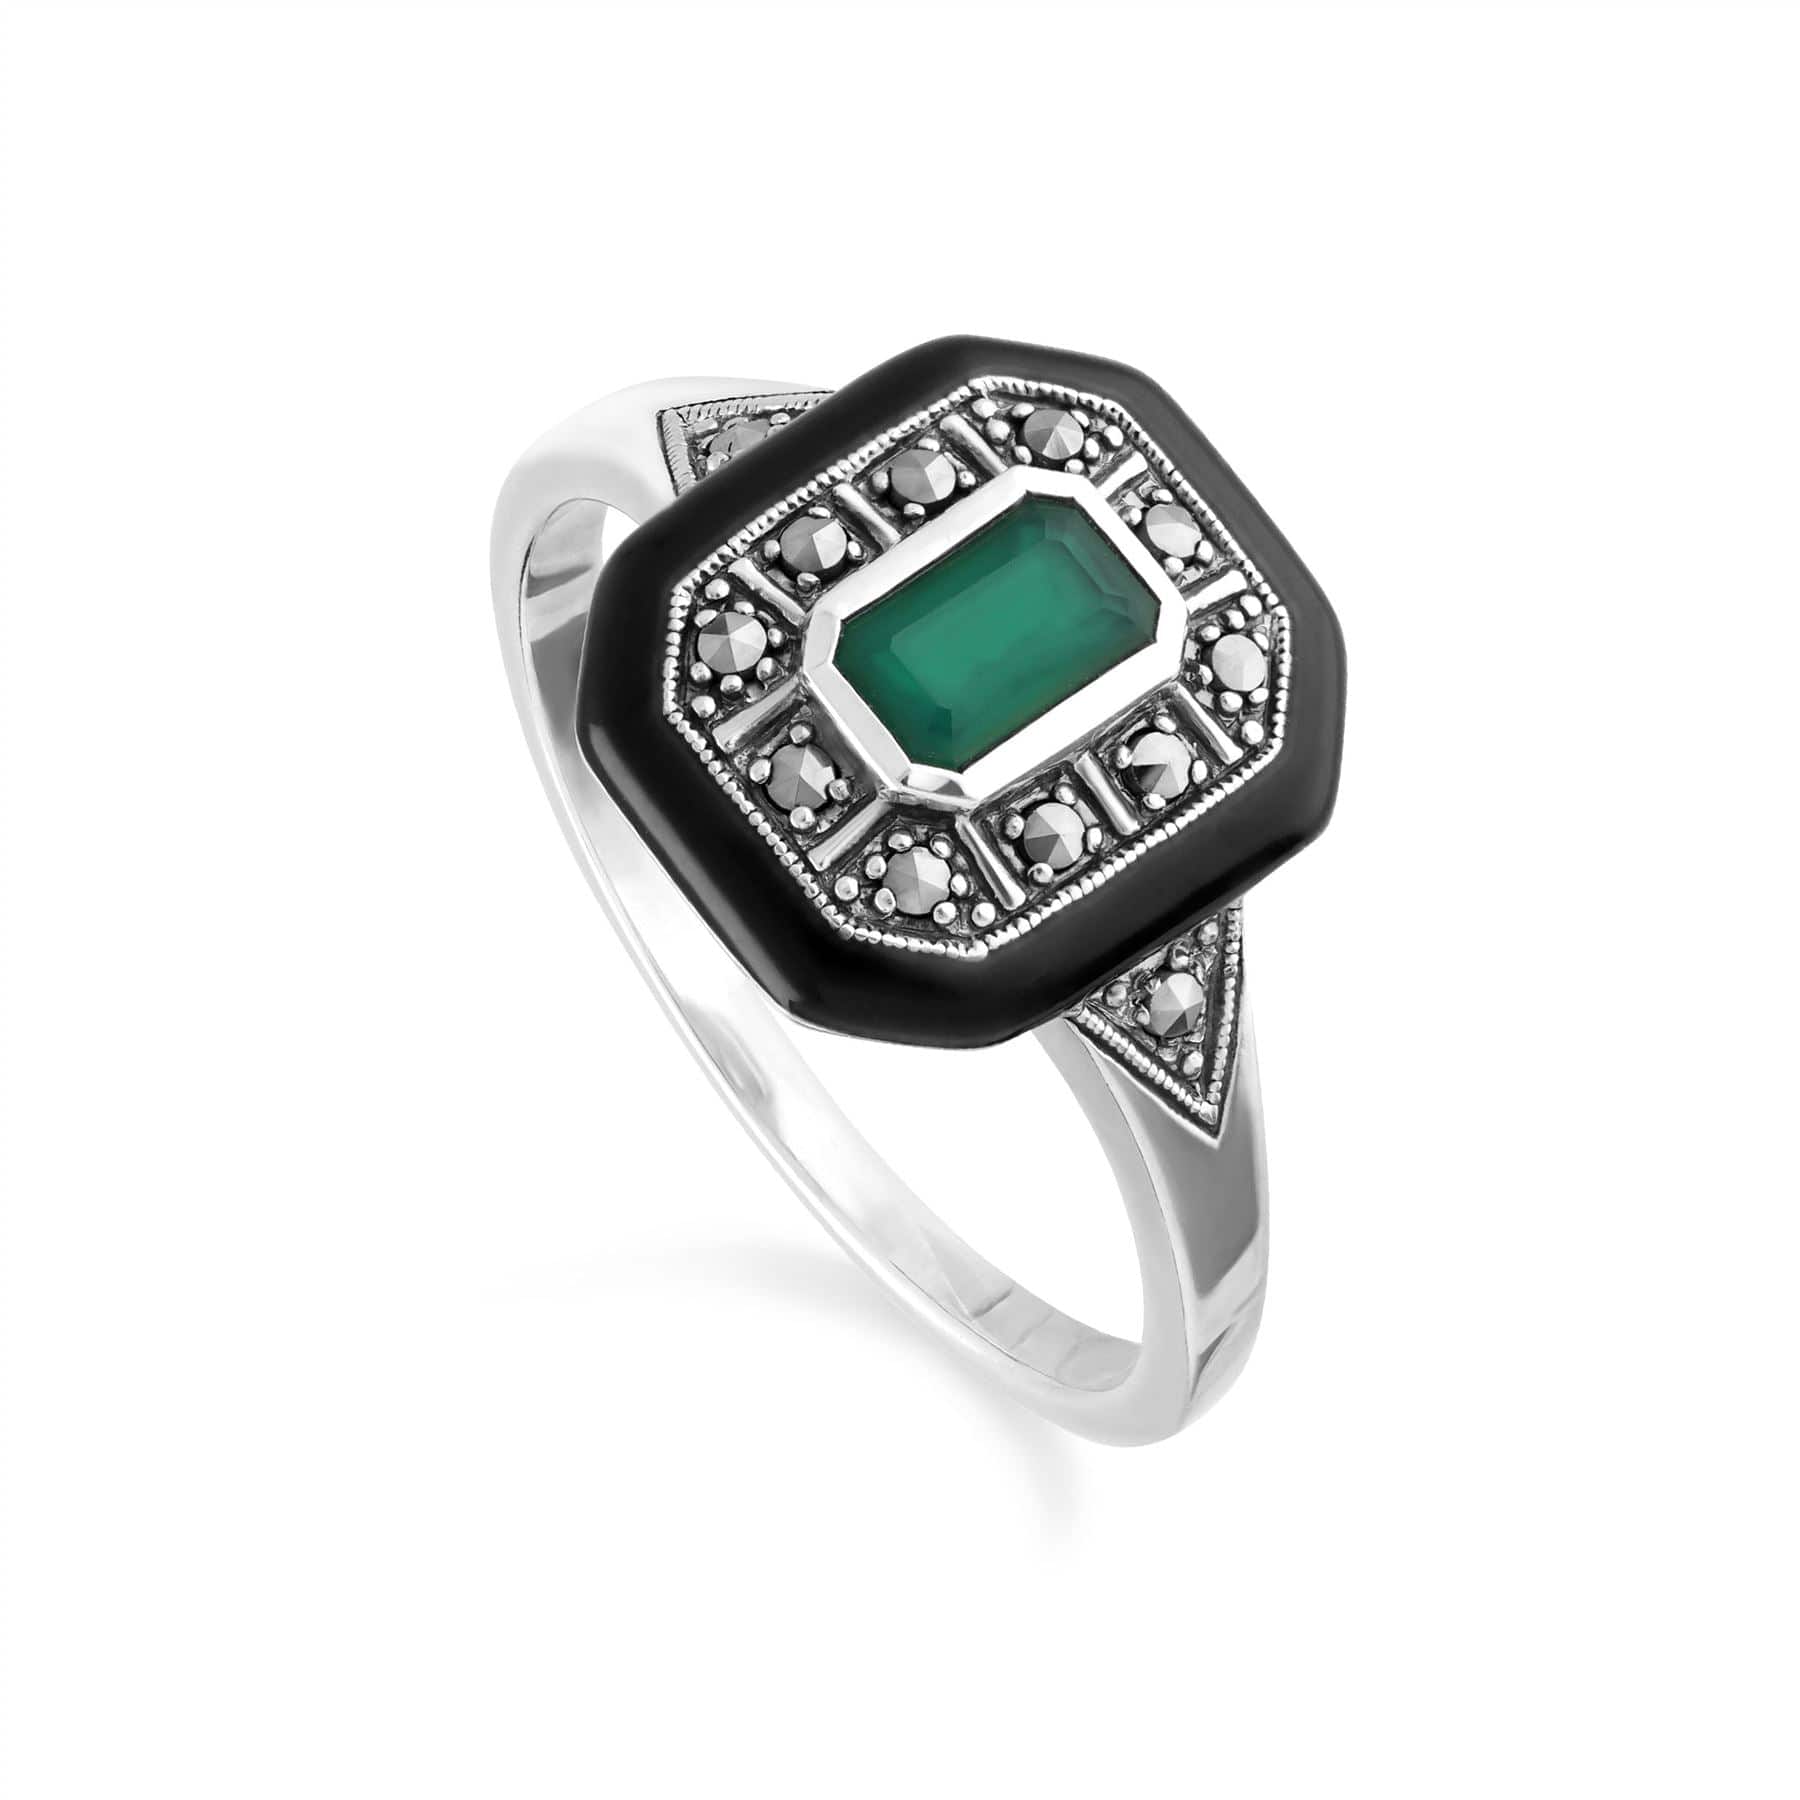 Art Deco Inspired Chalcedony, Enamel & Marcasite Square Ring In Sterling Silver - Gemondo